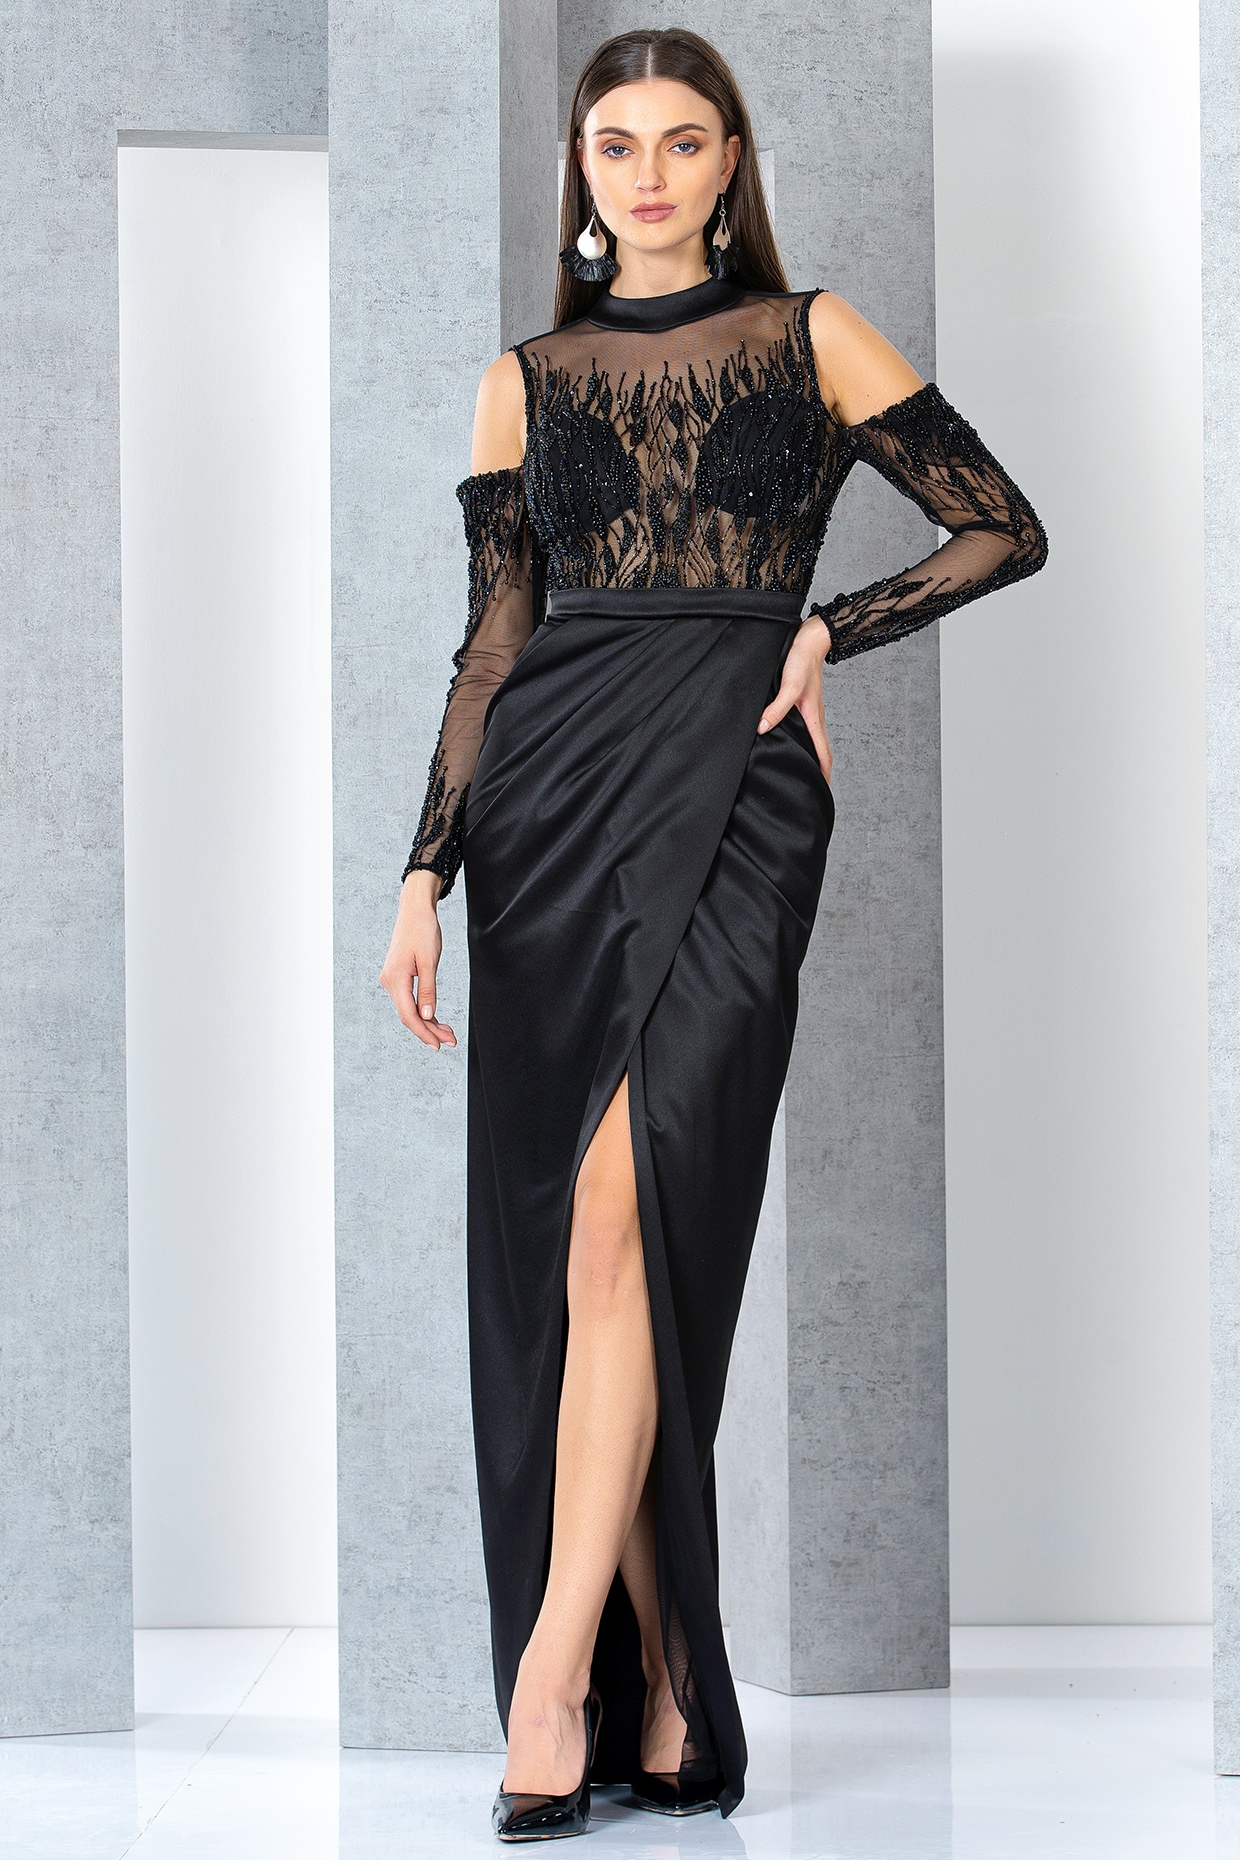 Parallel Line Design Black Color Latest Gown - Clothsvilla